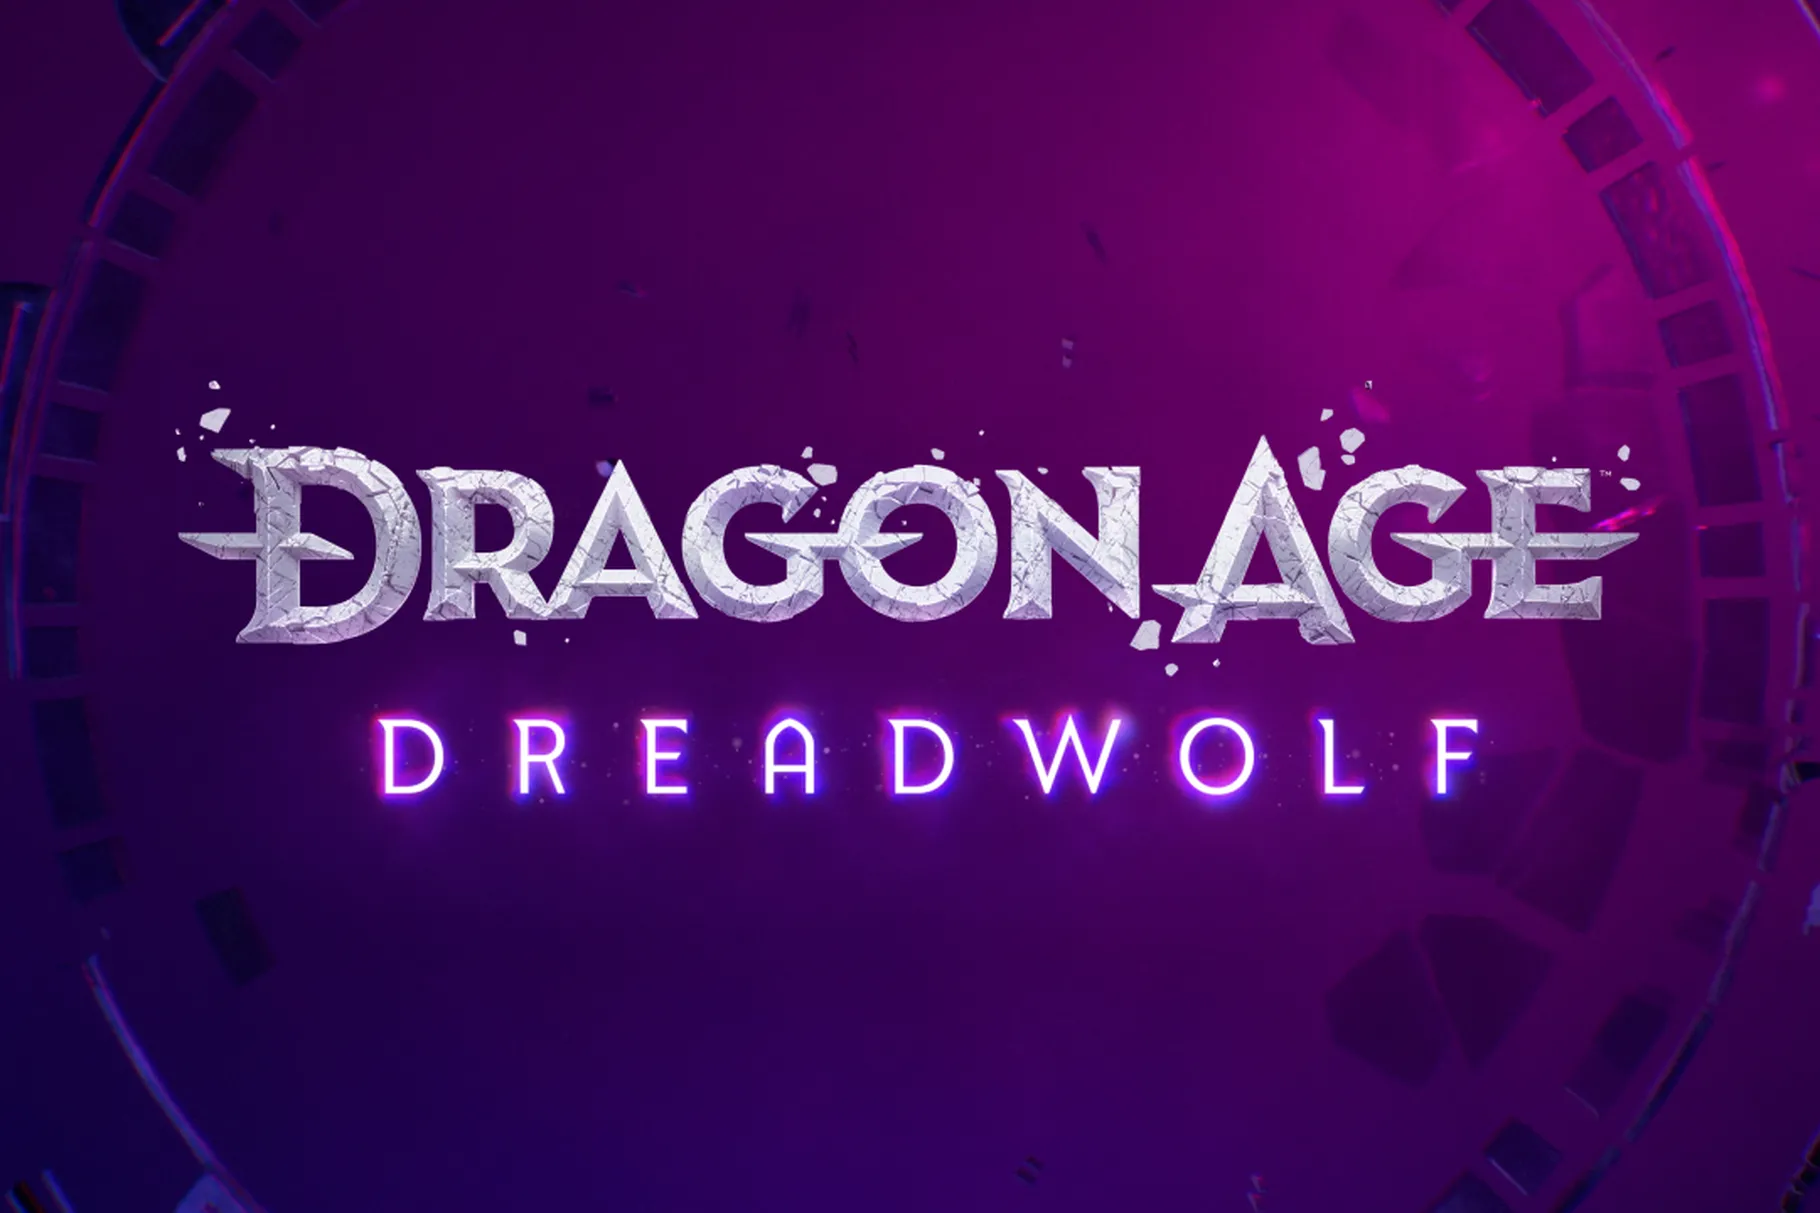 Dragon Age Dreadwolf text